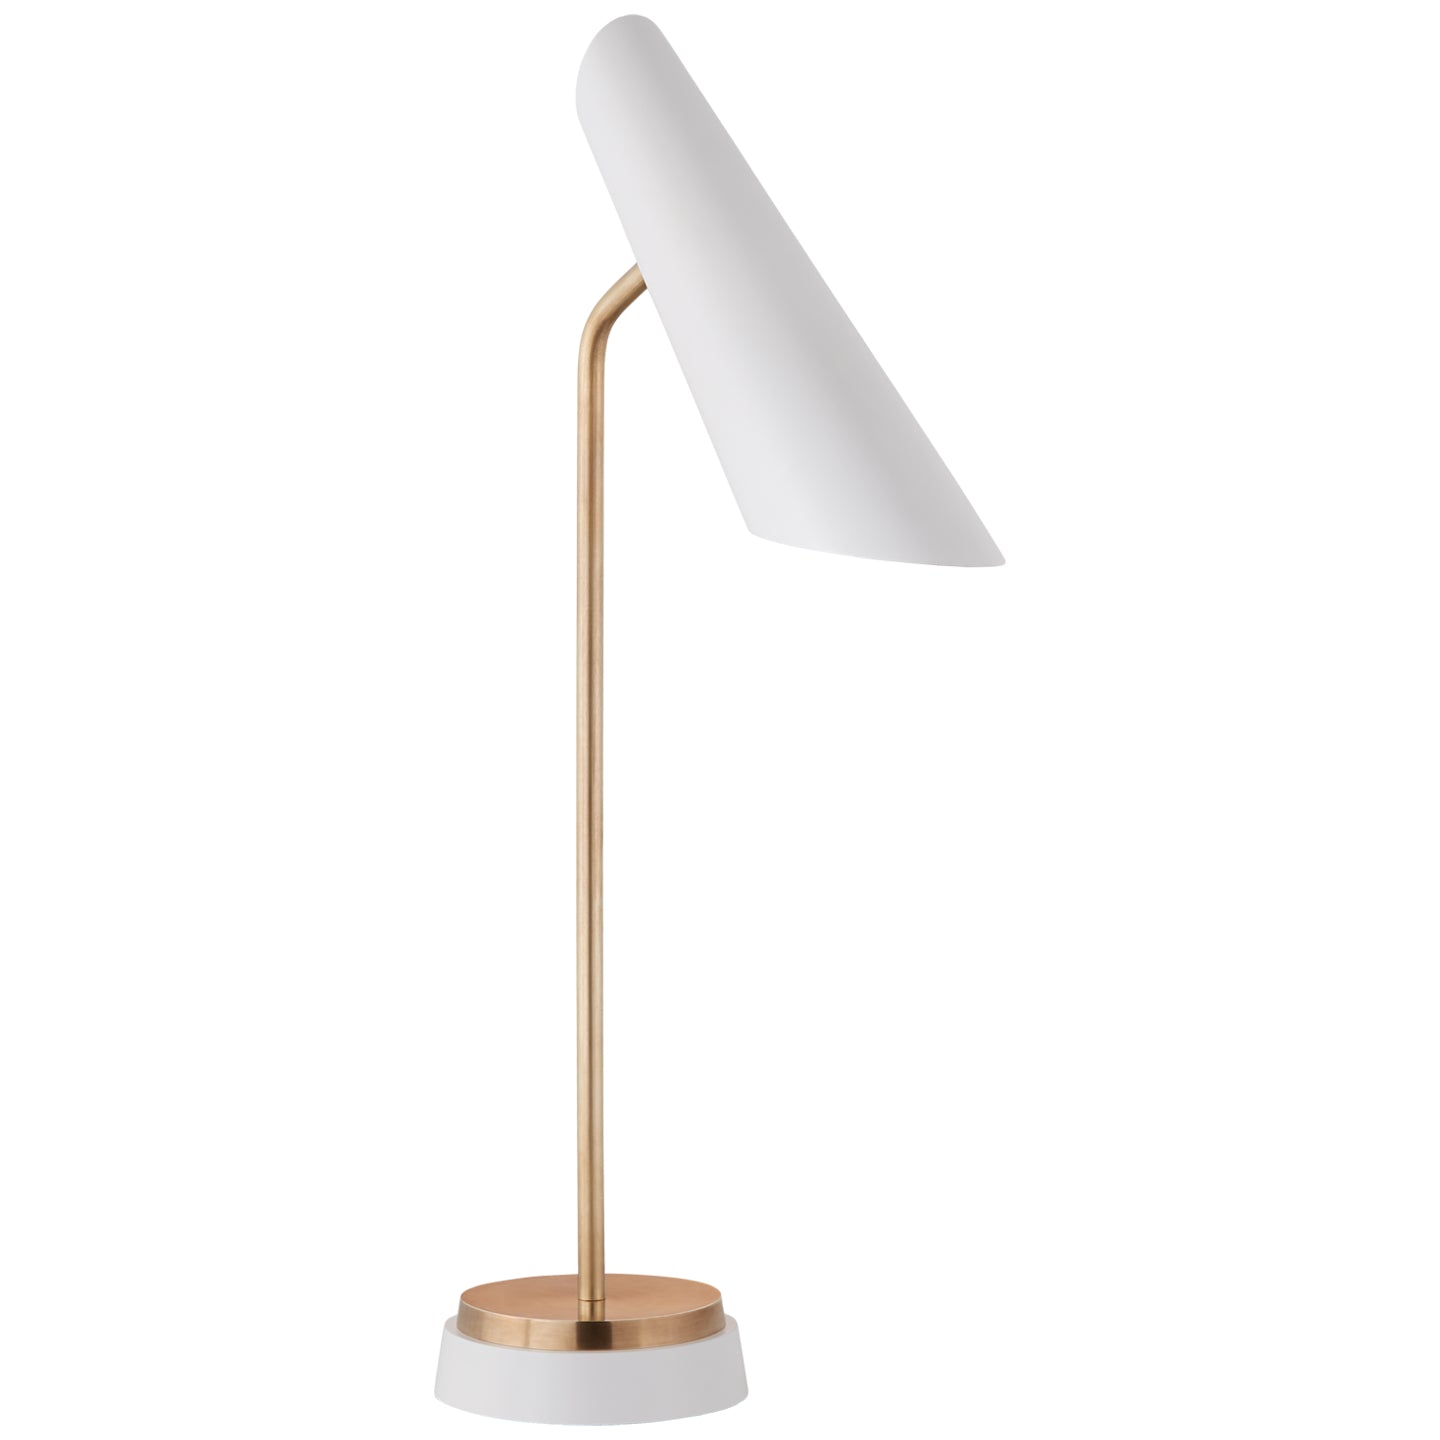 Visual Comfort Signature Canada - LED Task Lamp - Franca - Hand-Rubbed Antique Brass- Union Lighting Luminaires Decor